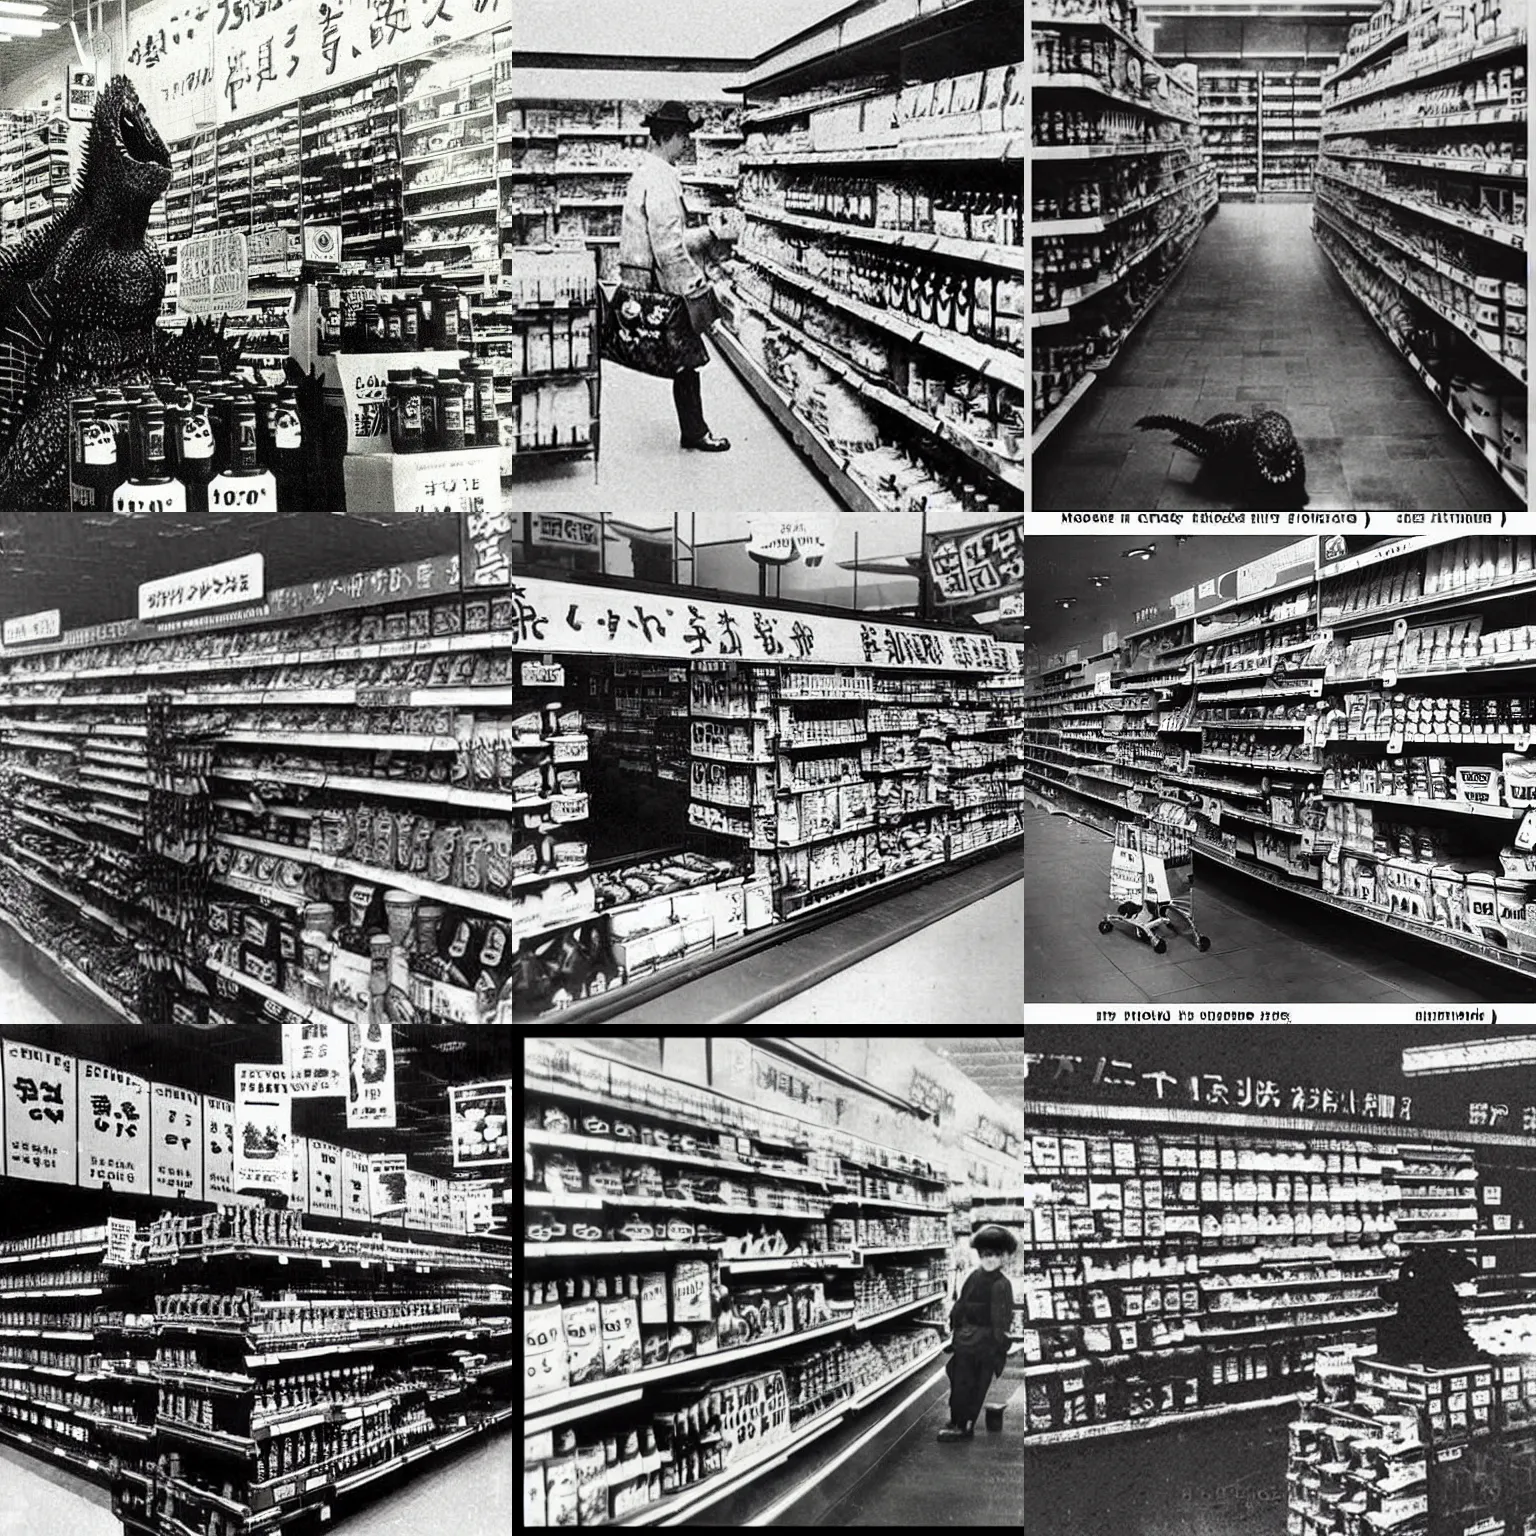 Prompt: “Godzilla in supermarket, 1900’s photo”